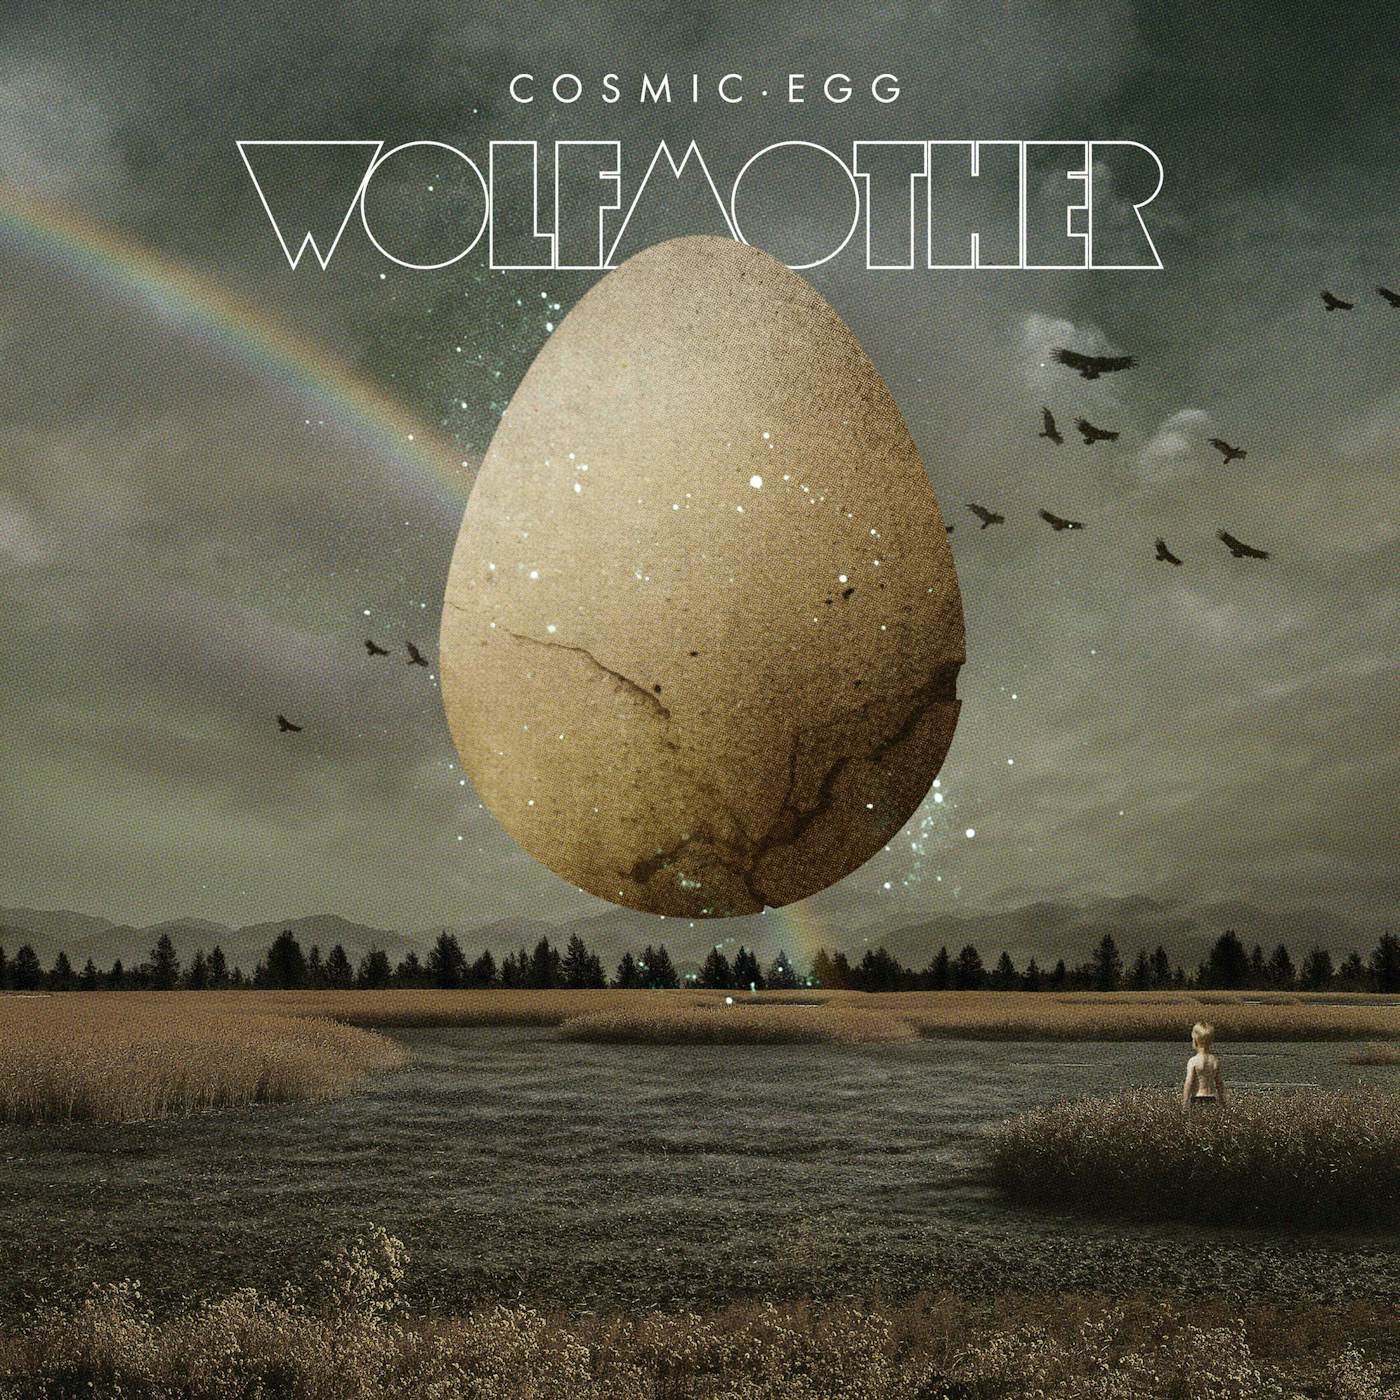 Wolfmother Cosmic Egg Vinyl Record